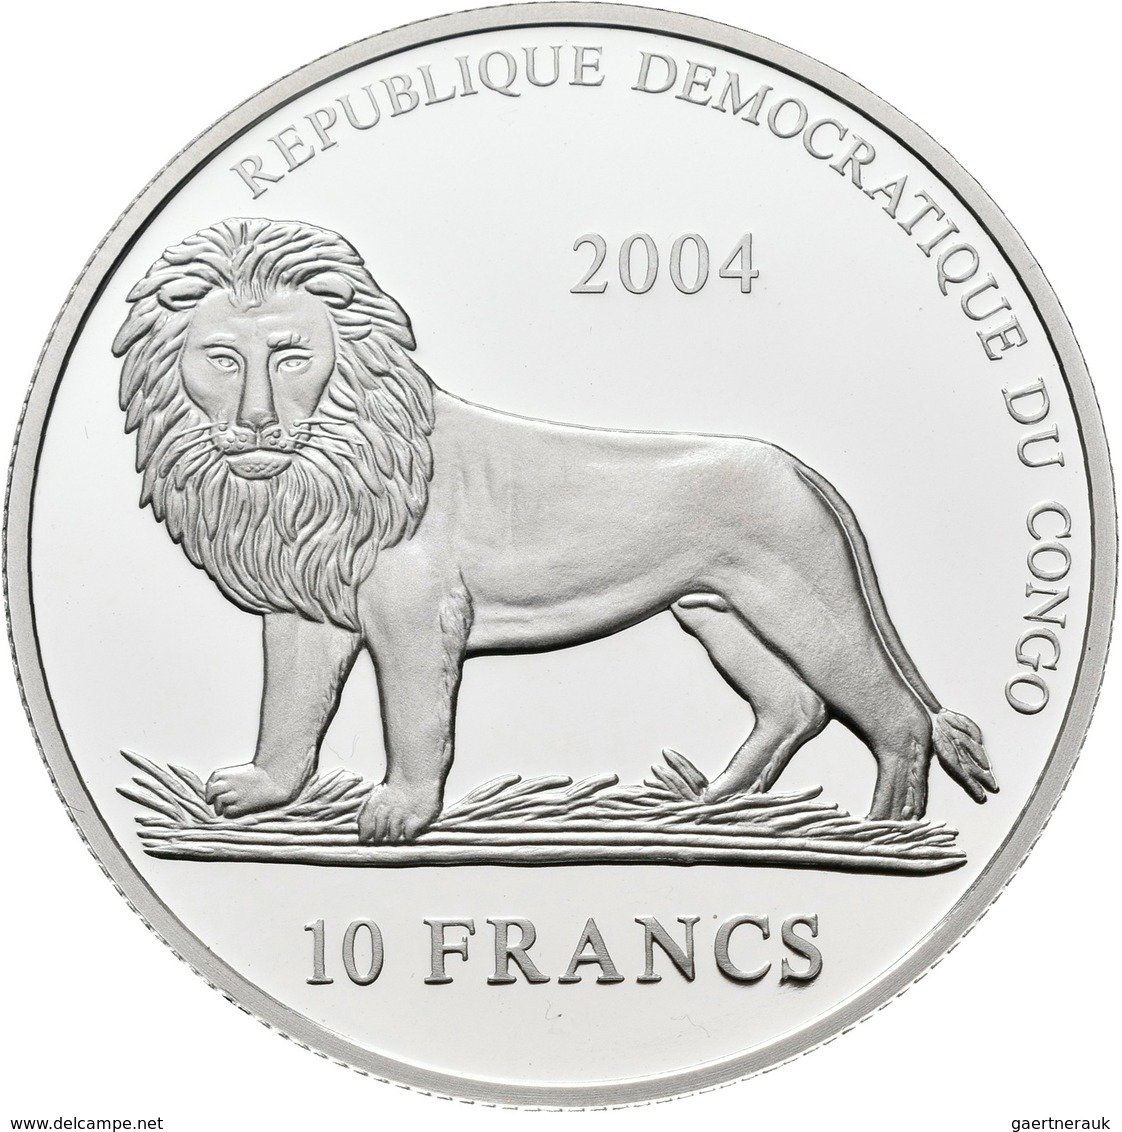 Kongo, DR / Zaire - Anlagegold: 20 Francs 2004 Motiv Ferrari. KM# 144. 1,24g (1/25 OZ) 999/1000 Gold - Congo (Democratische Republiek 1964-70)